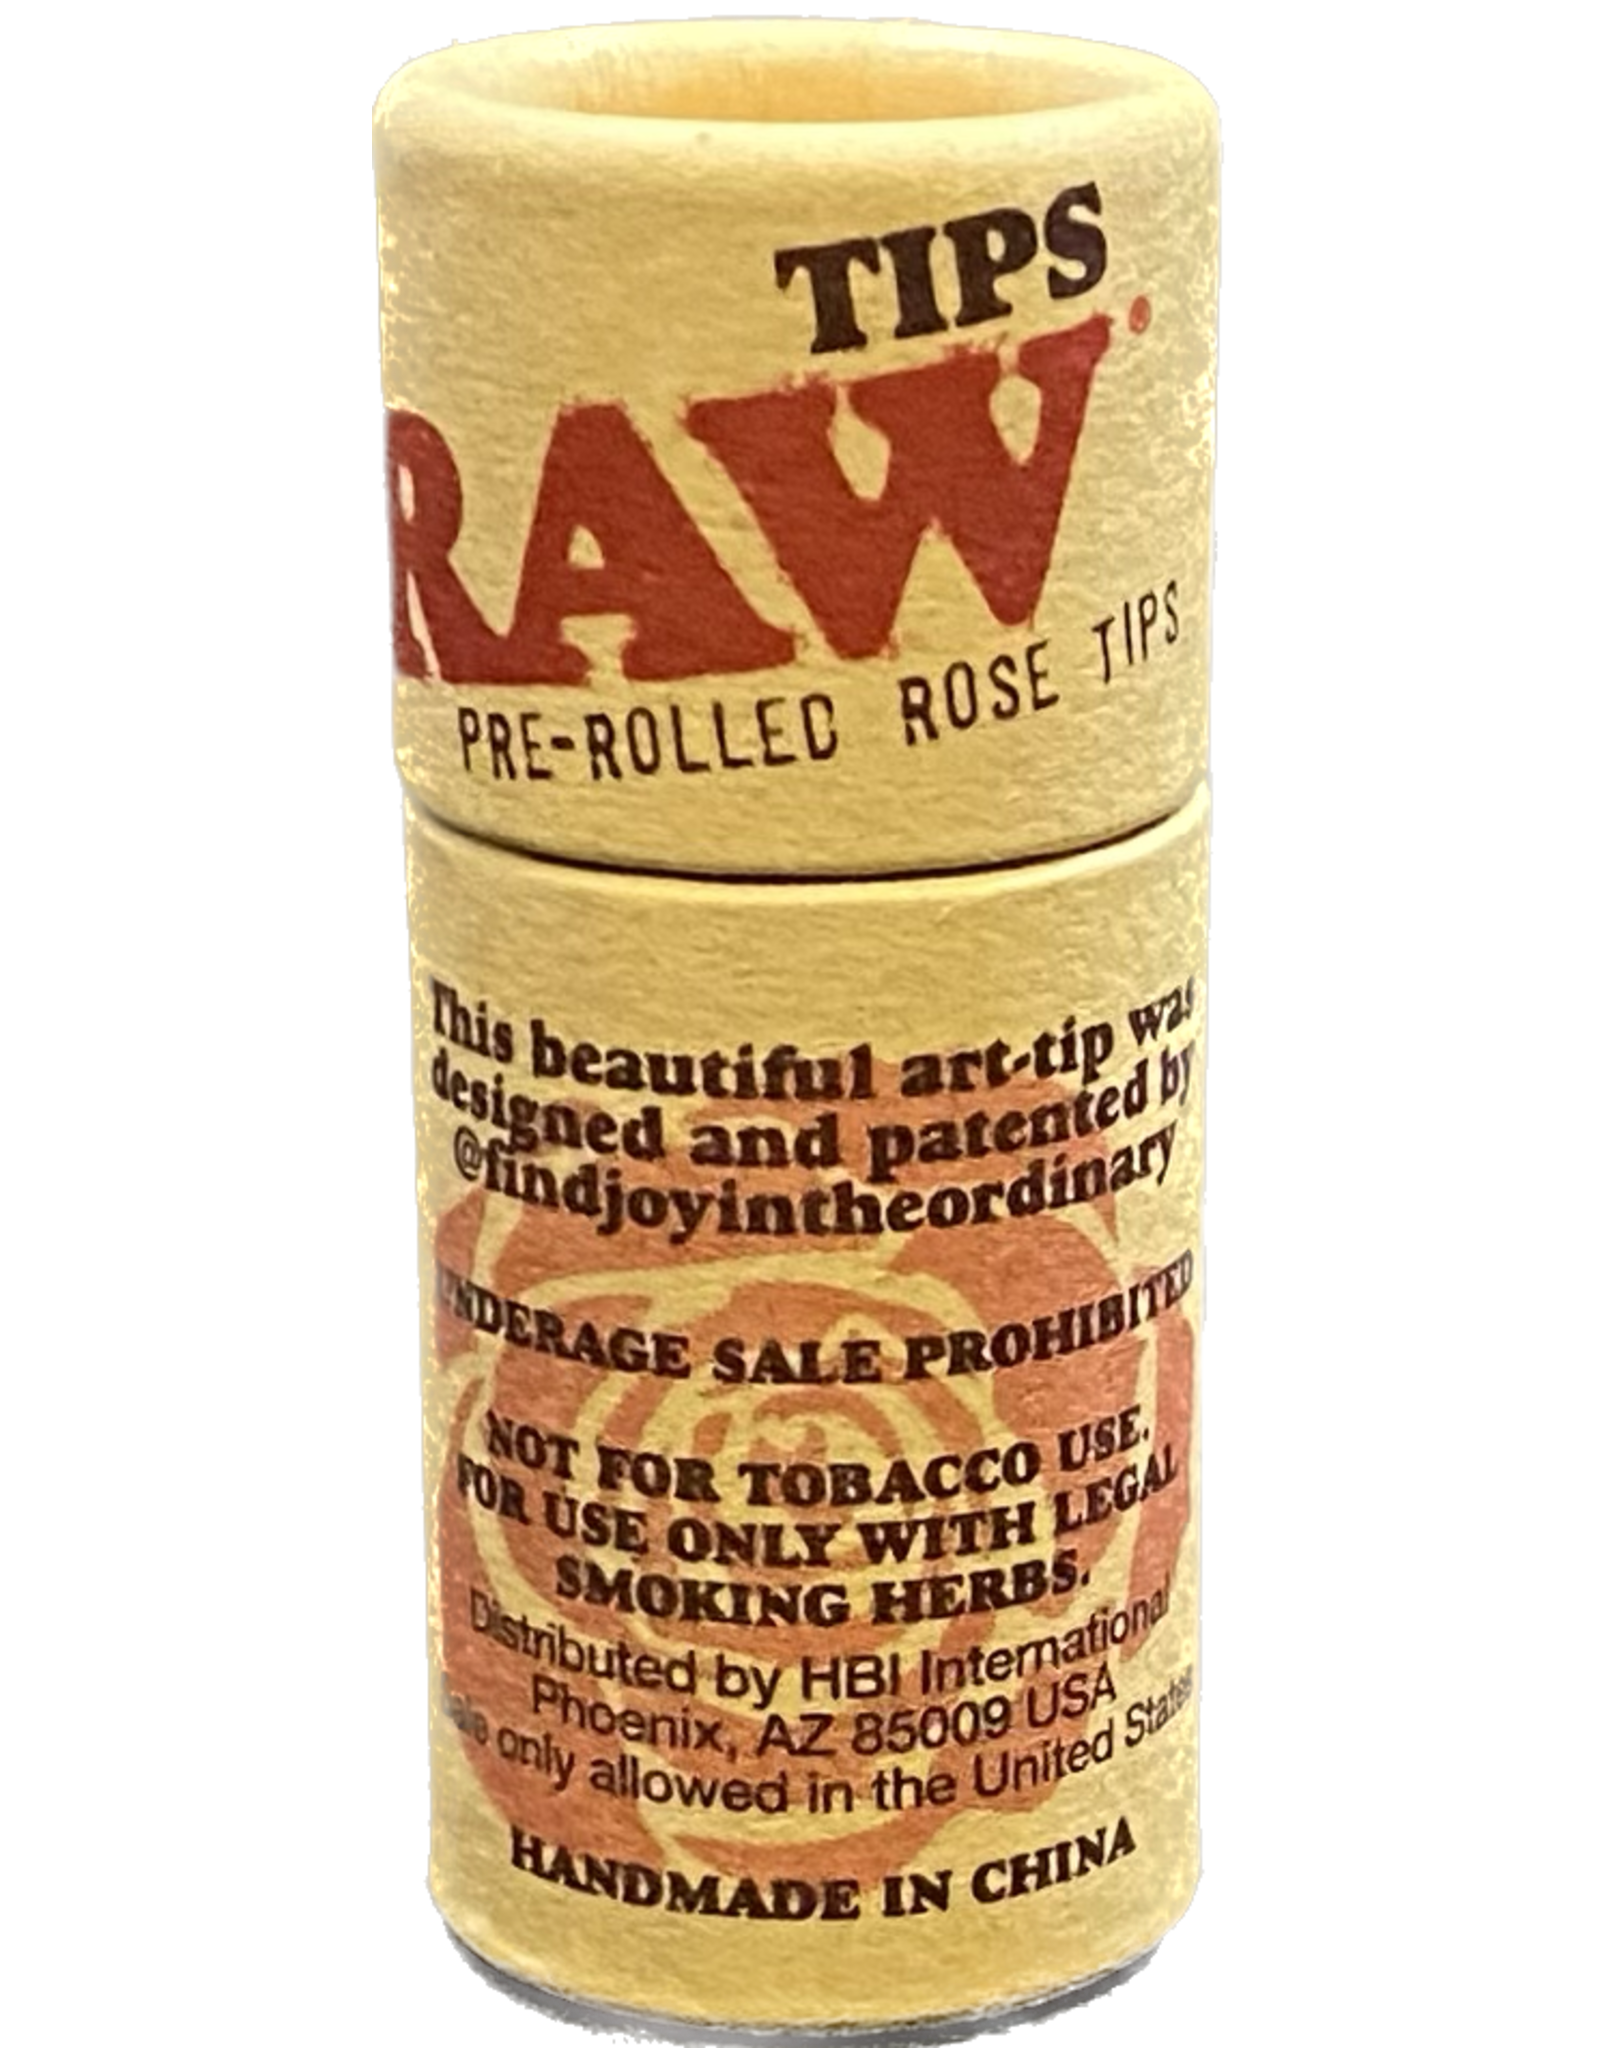 Raw Raw Rose Tips